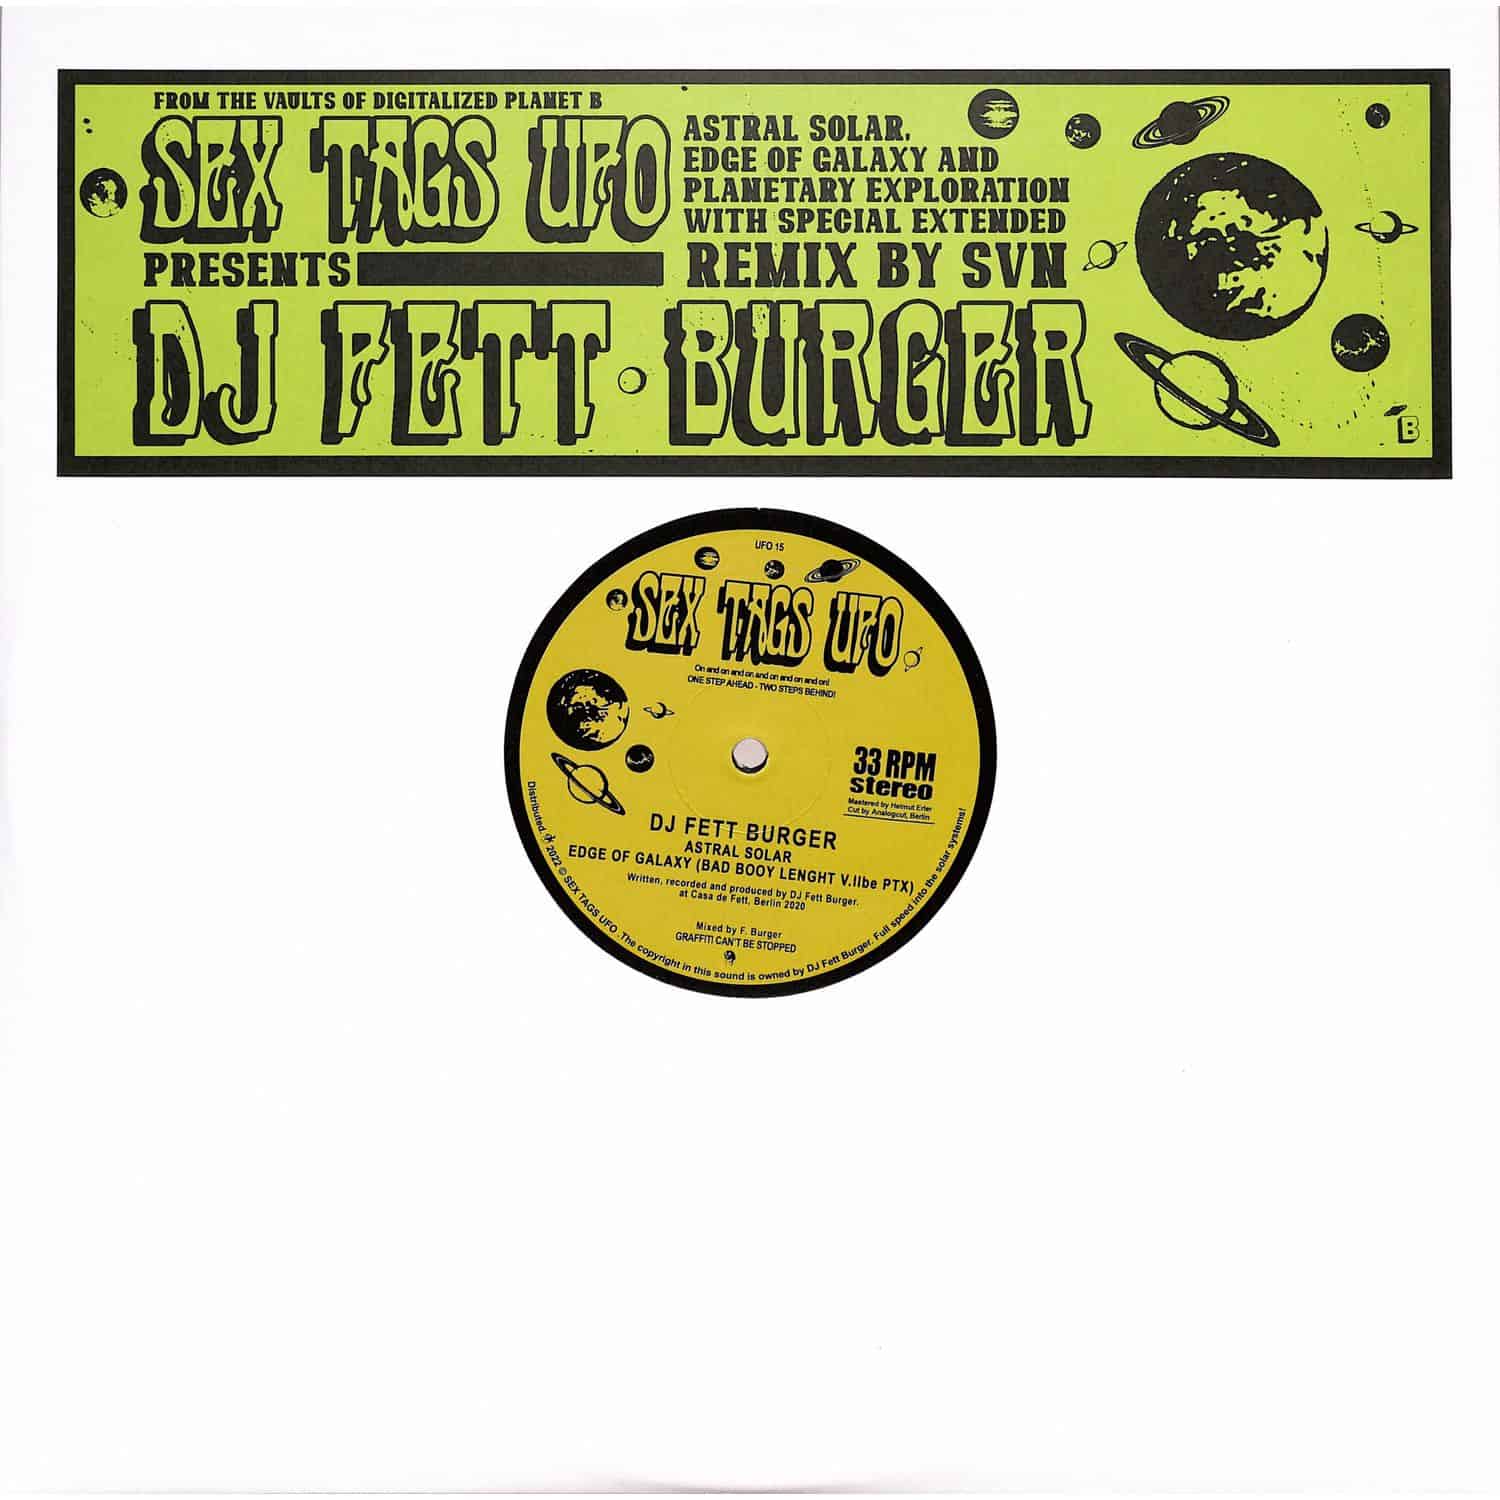 DJ Fett Burger - ASTRAL SOLAR, EDGE OF GALAXY, PLANETARY EXPLORATION